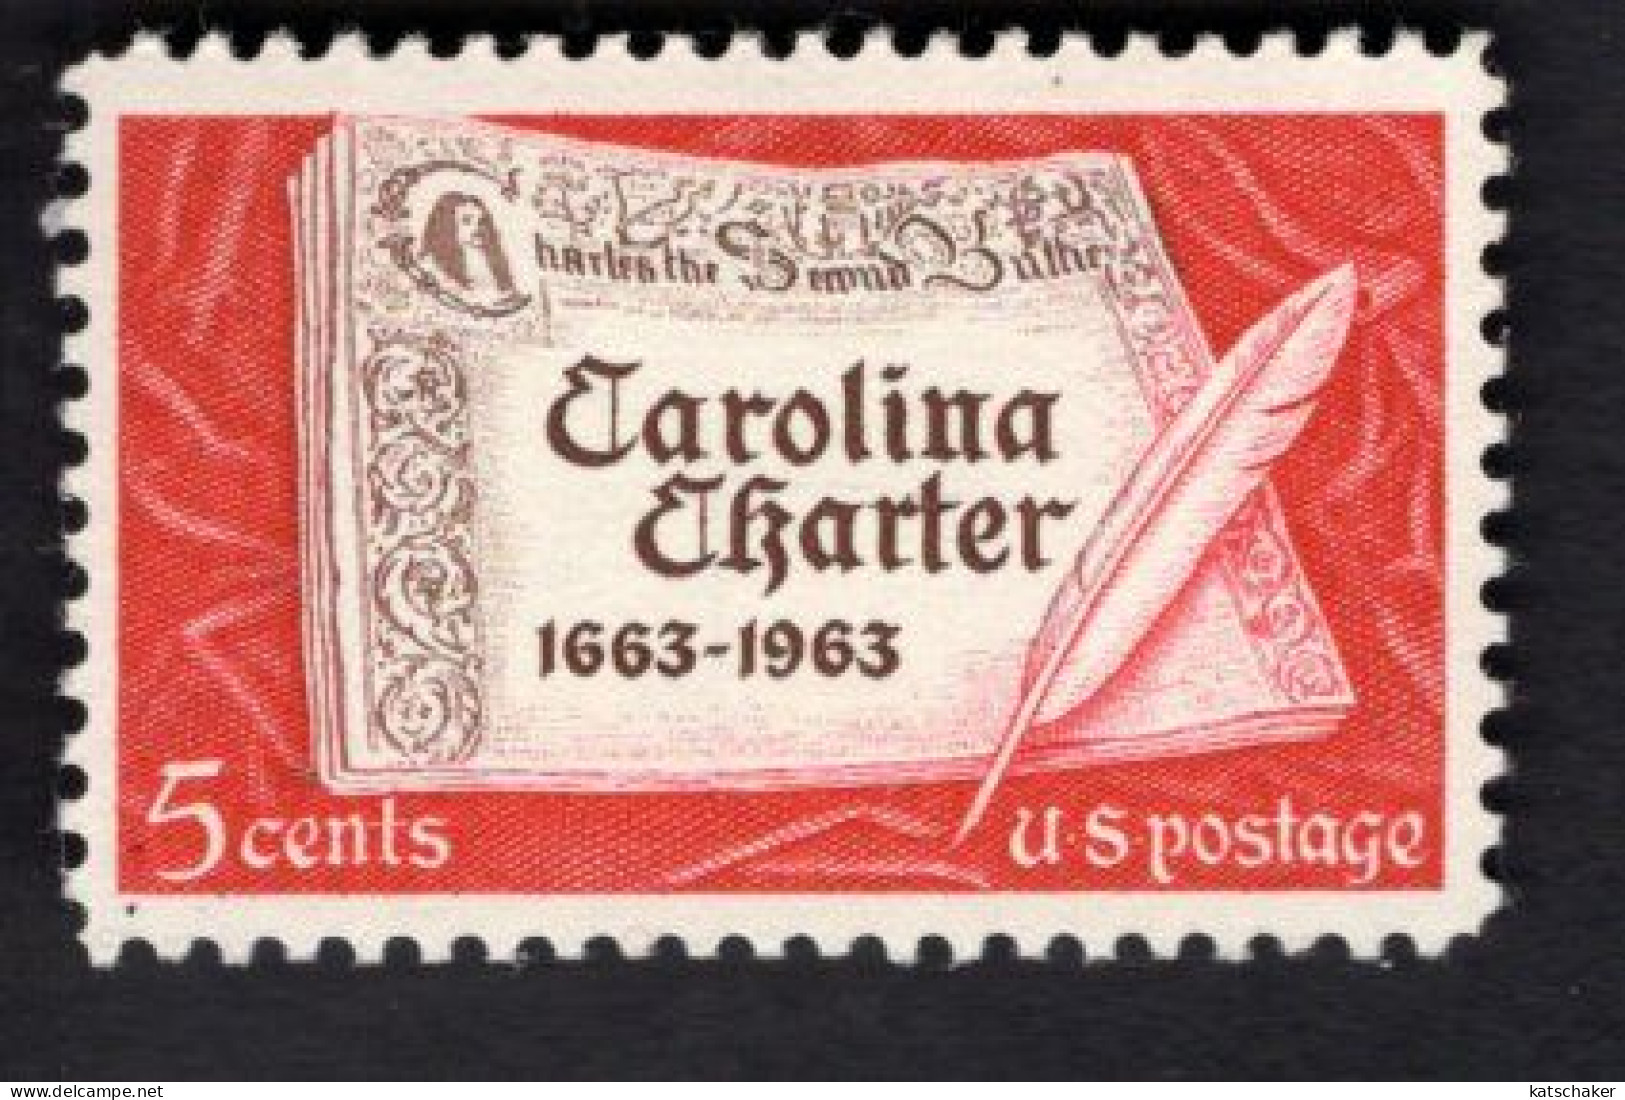 202325916 1963 SCOTT 1230 (XX) POSTFRIS MINT NEVER HINGED   -  CAROLINA CHARTER - Unused Stamps